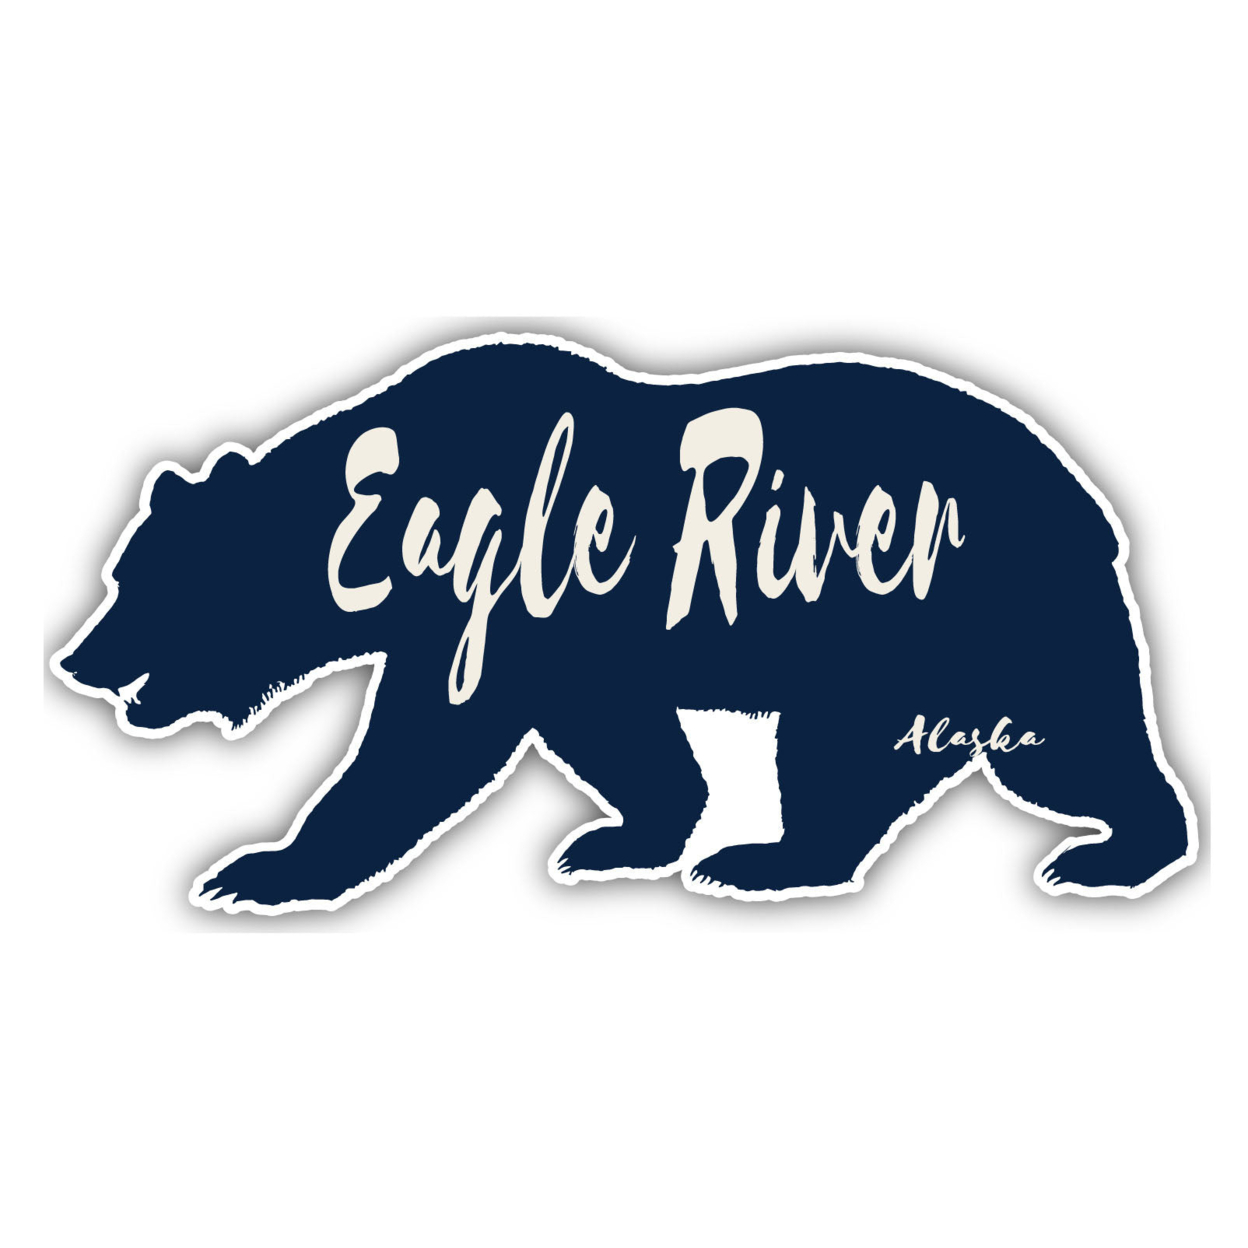 Eagle River Alaska Souvenir Decorative Stickers (Choose Theme And Size) - Single Unit, 8-Inch, Tent